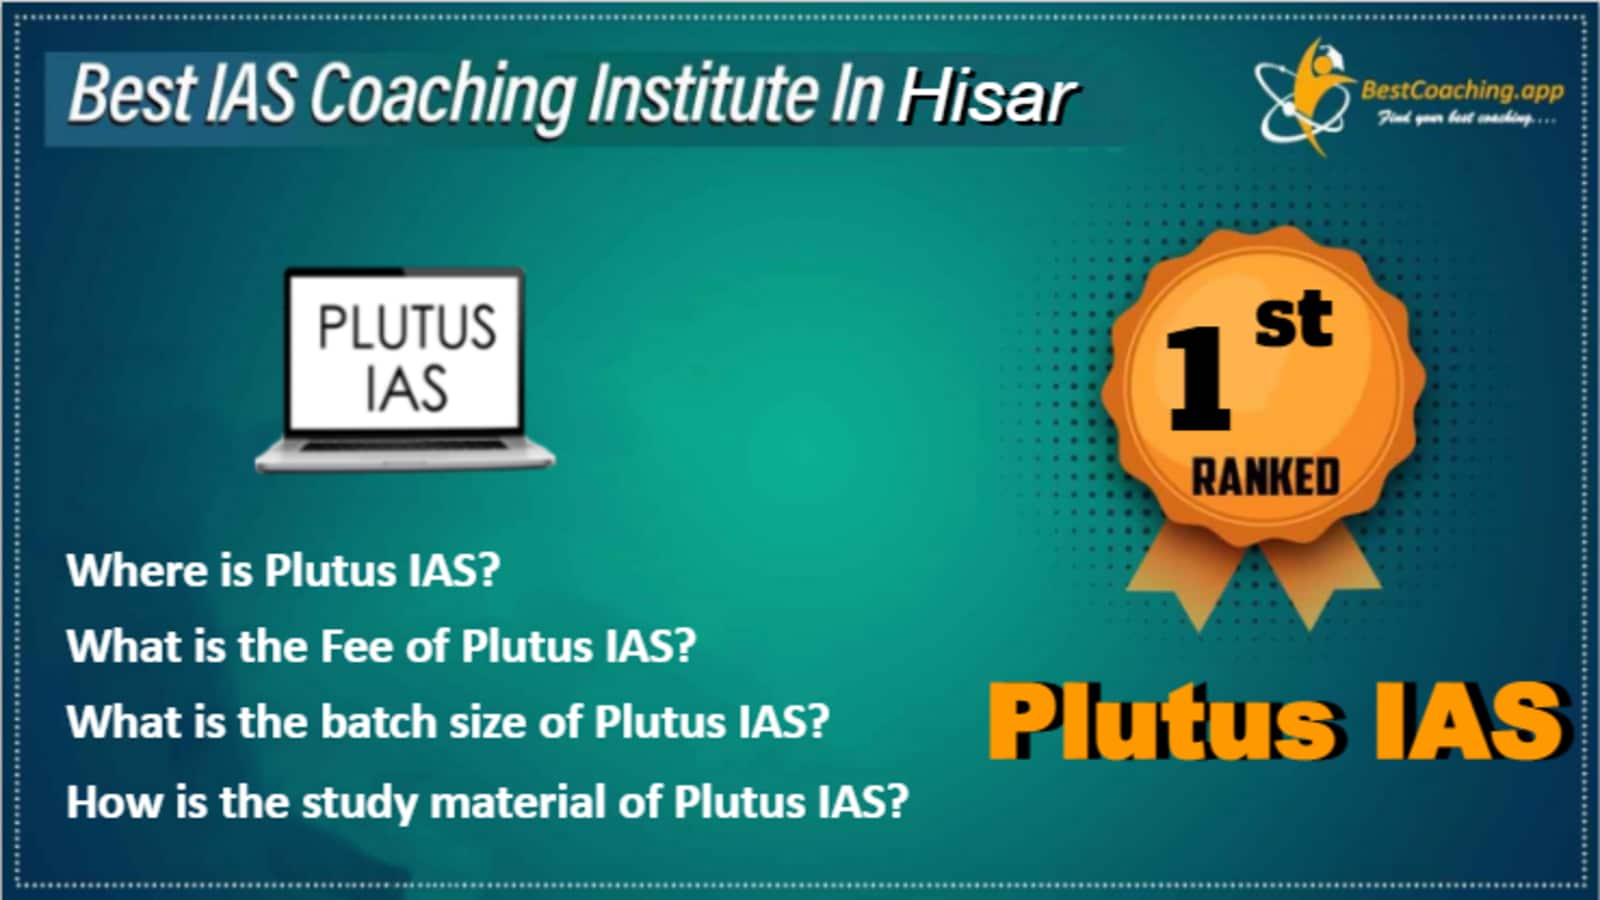 Rank 1 Best IAS Coaching in Hisar